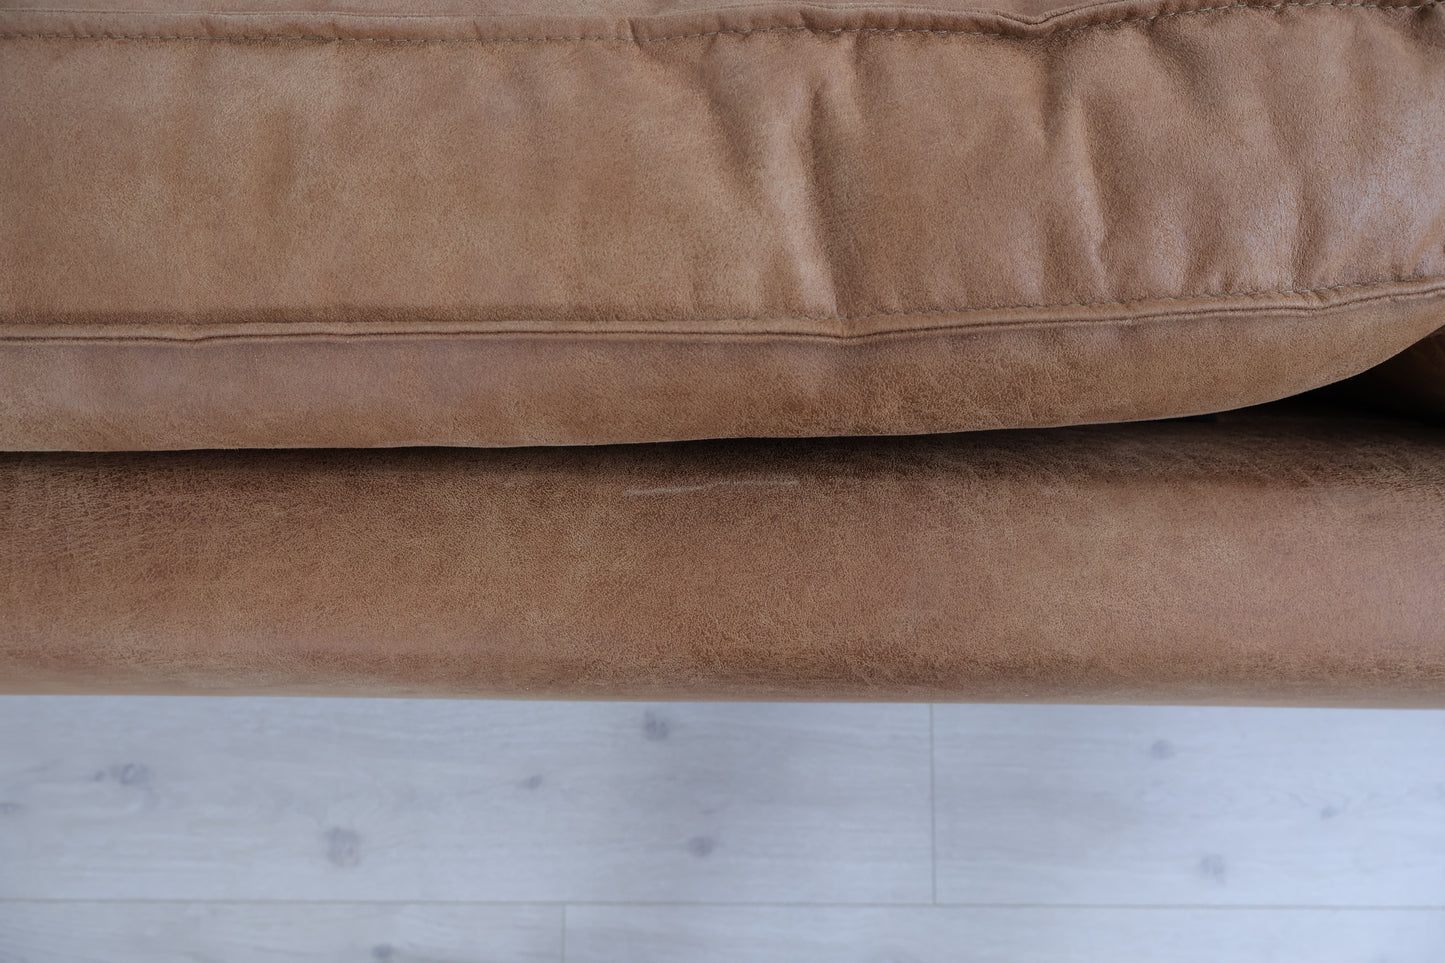 Nyrenset | Westin 3,5-seter sofa fra Skeidar